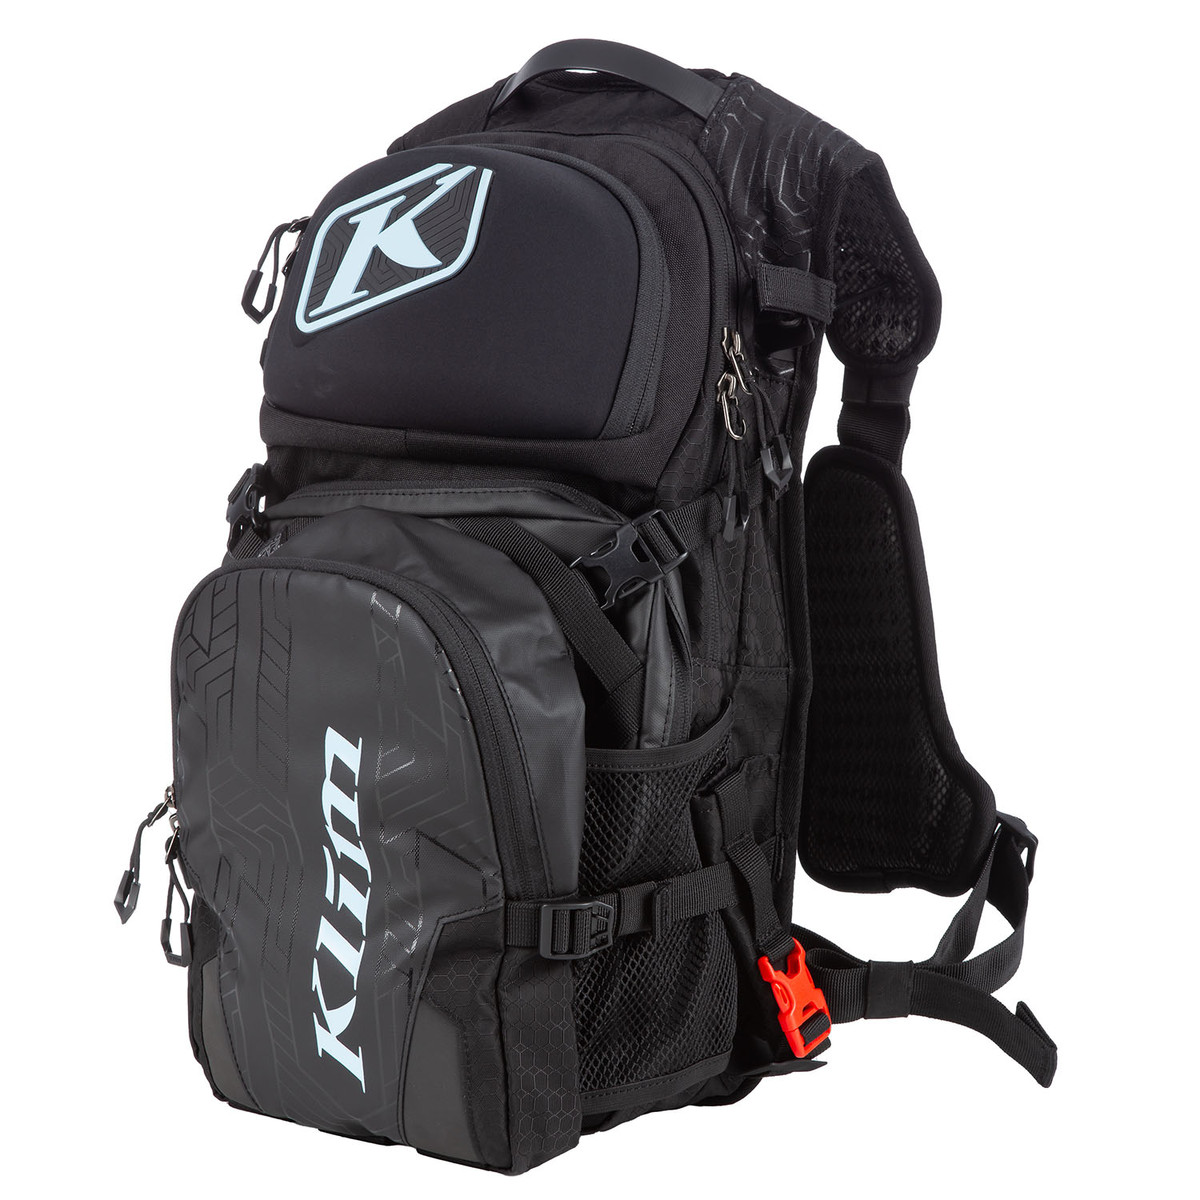 Klim Black/Crystal Blue Nac Pak Backpack NEW! - Fix Power Sports Inc.